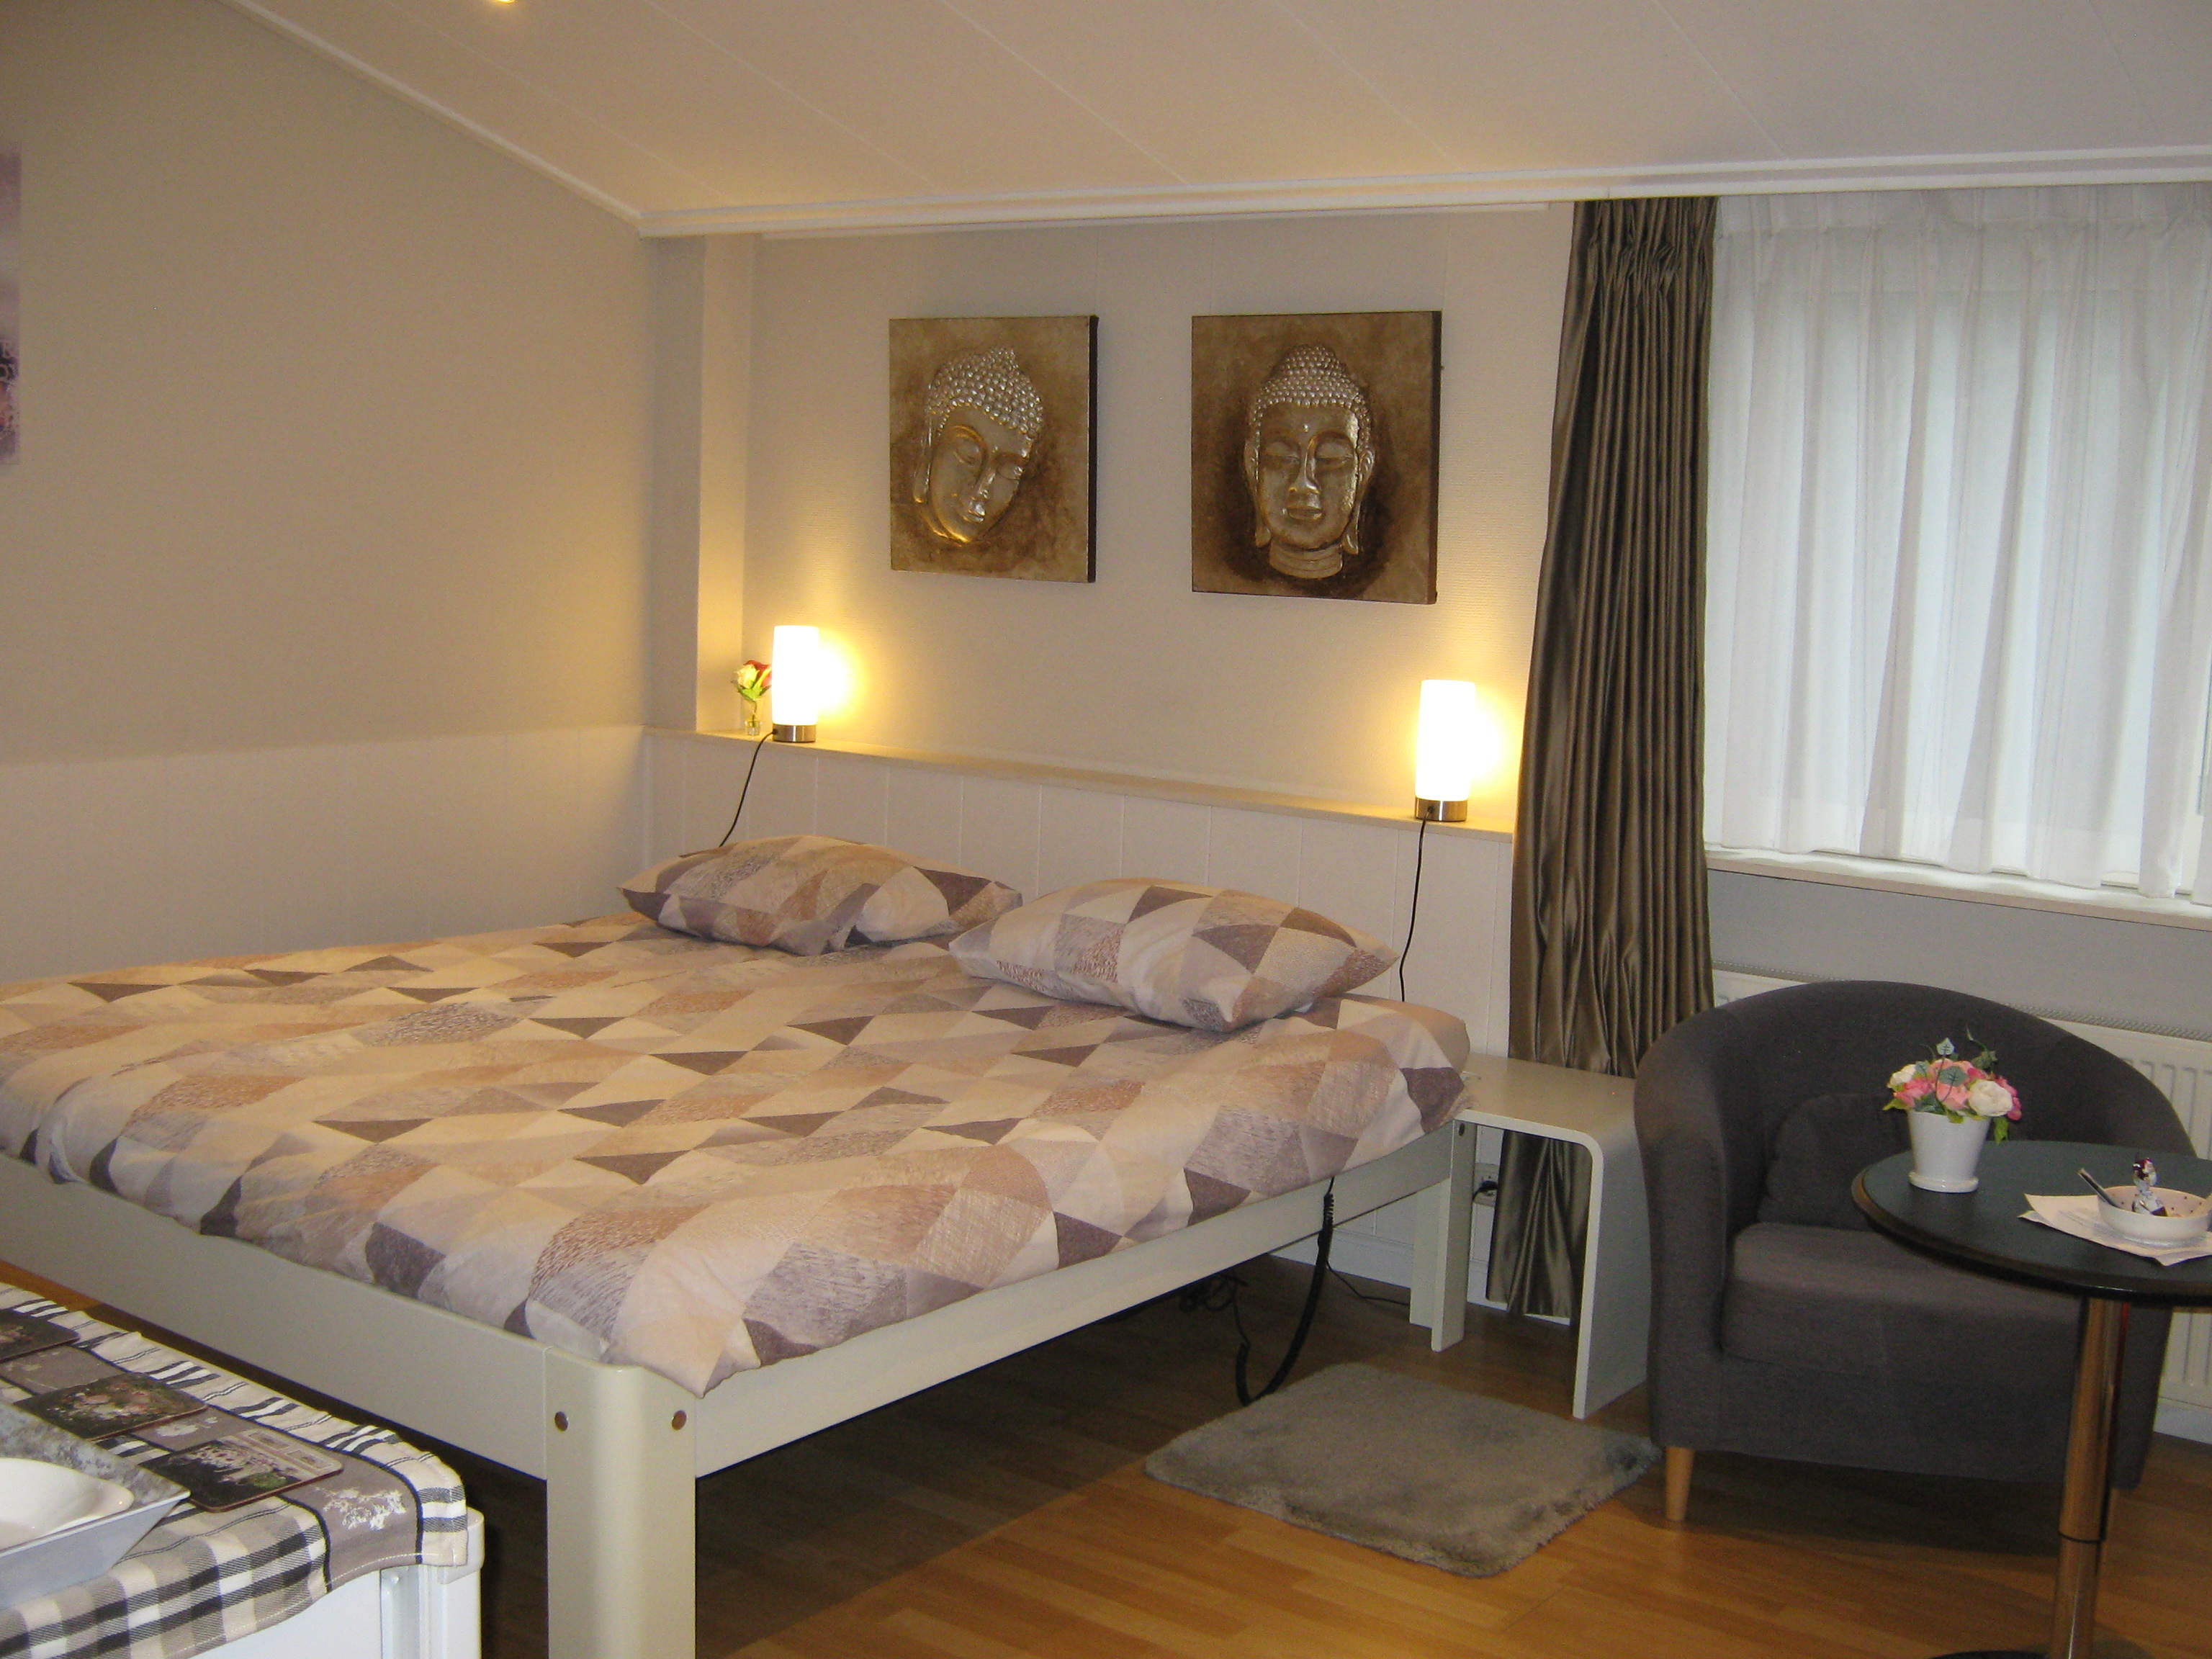 Lits-Jumeaux bed met 2 apart elektrisch verstelbare bedbodems.